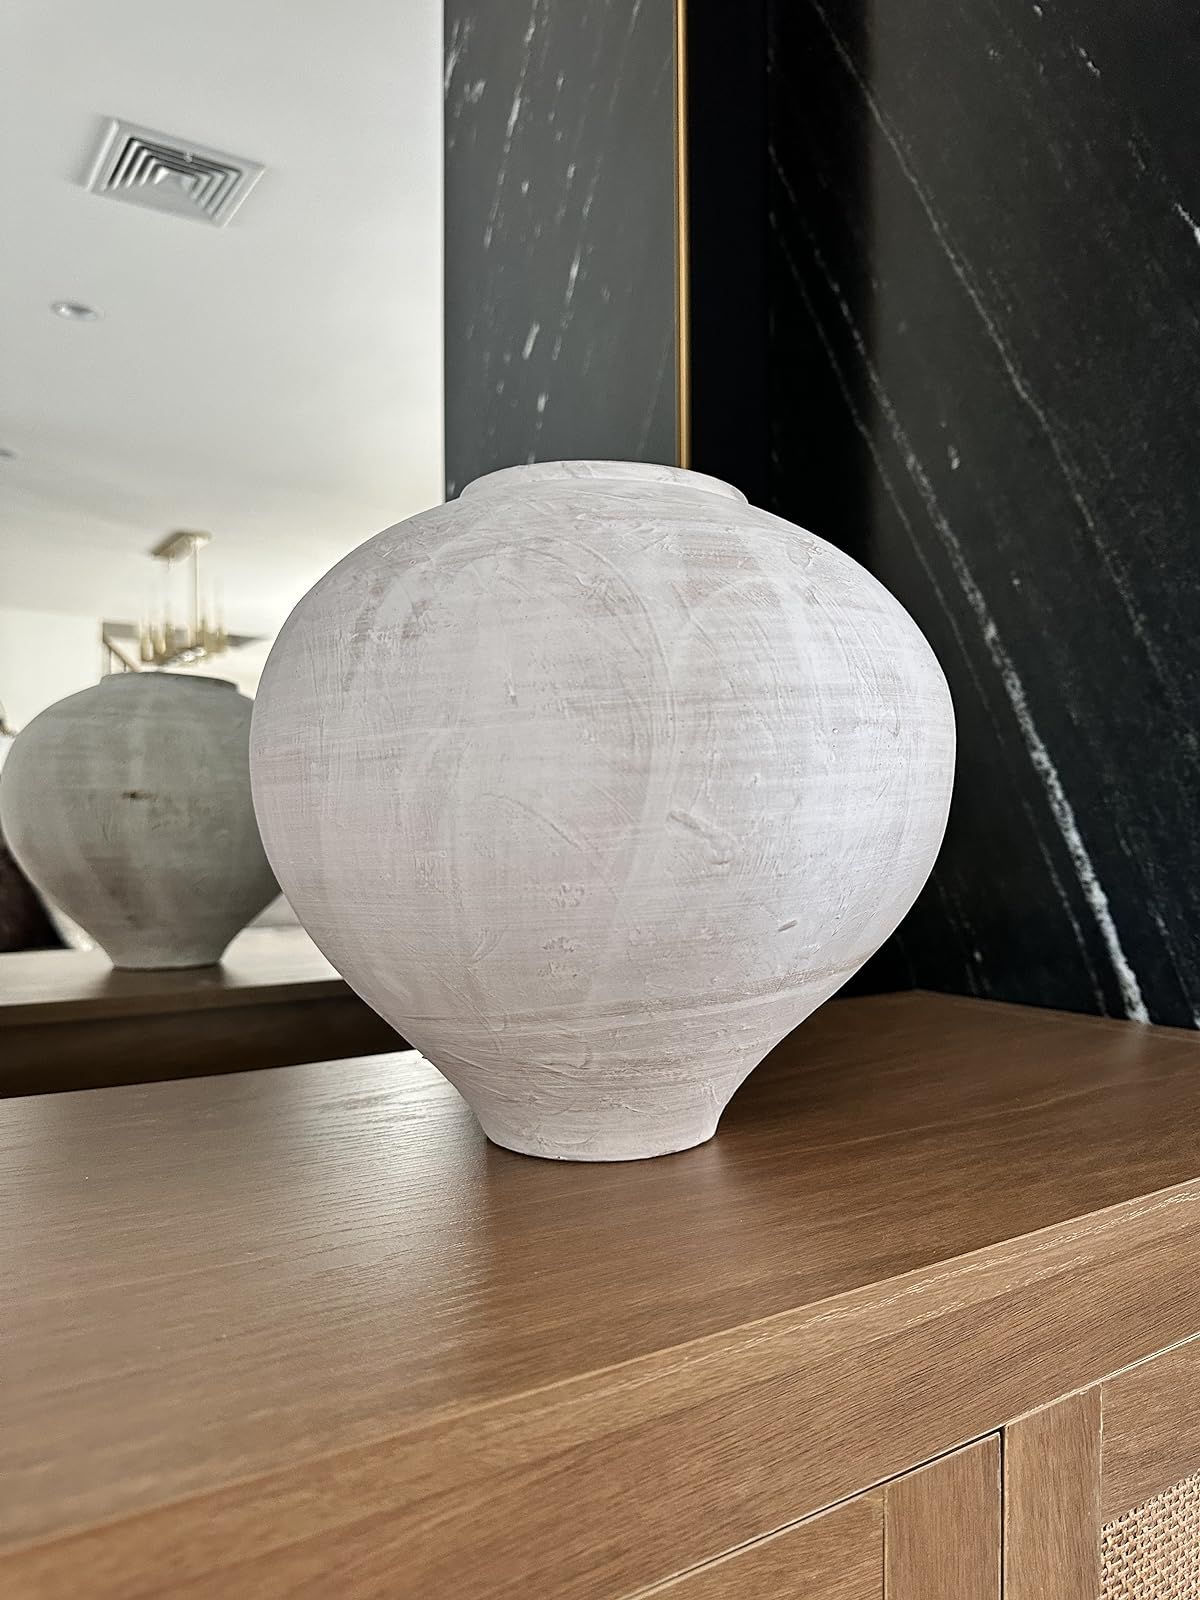 Modern organic artisan vase, pottery barn style, designer look for less, home decor, shelf styling inspo | Amazon (US)